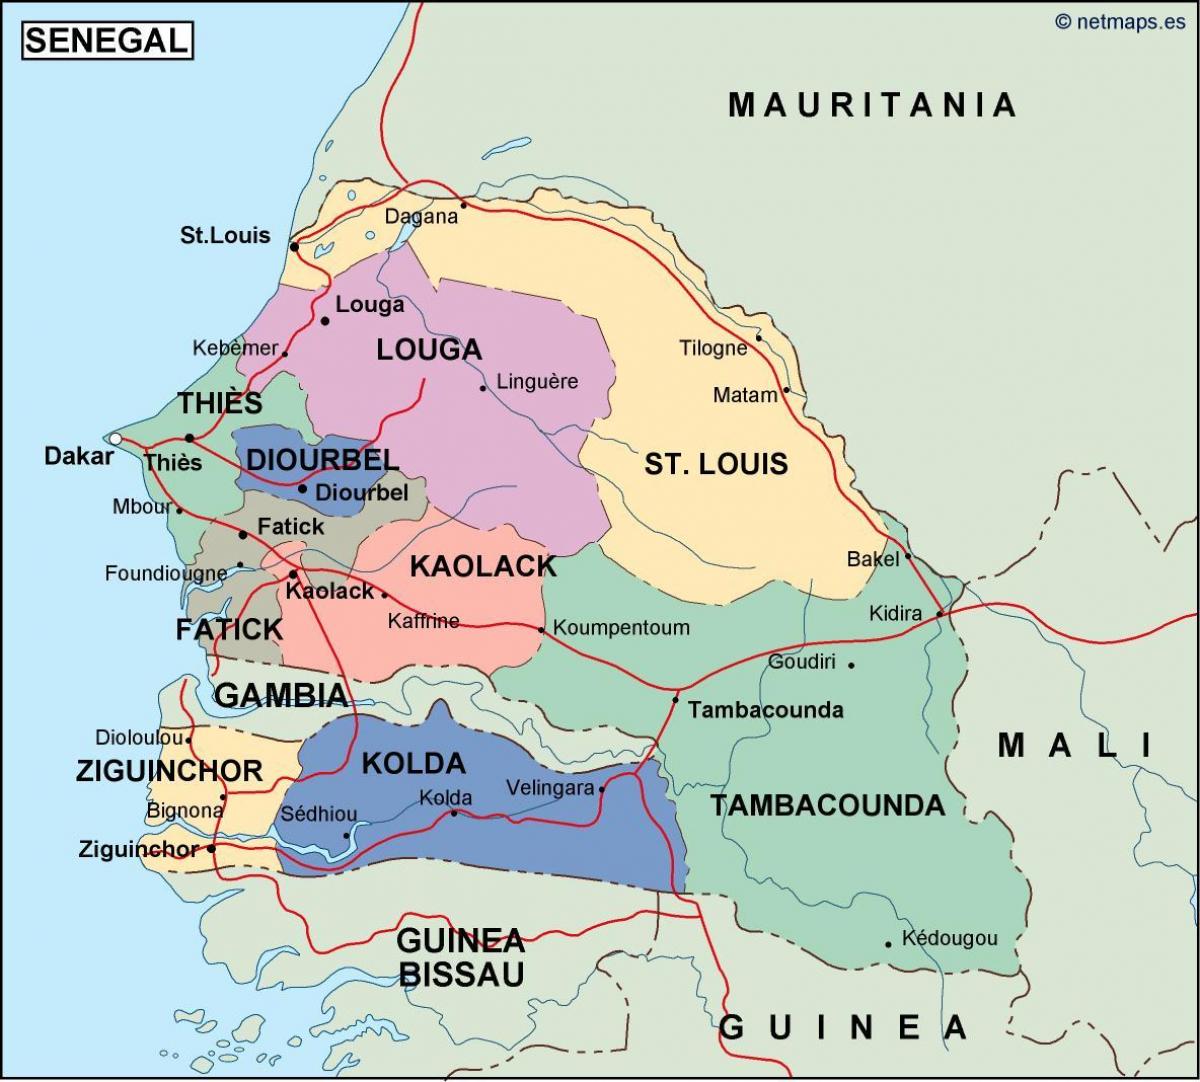 peta dari Senegal negara